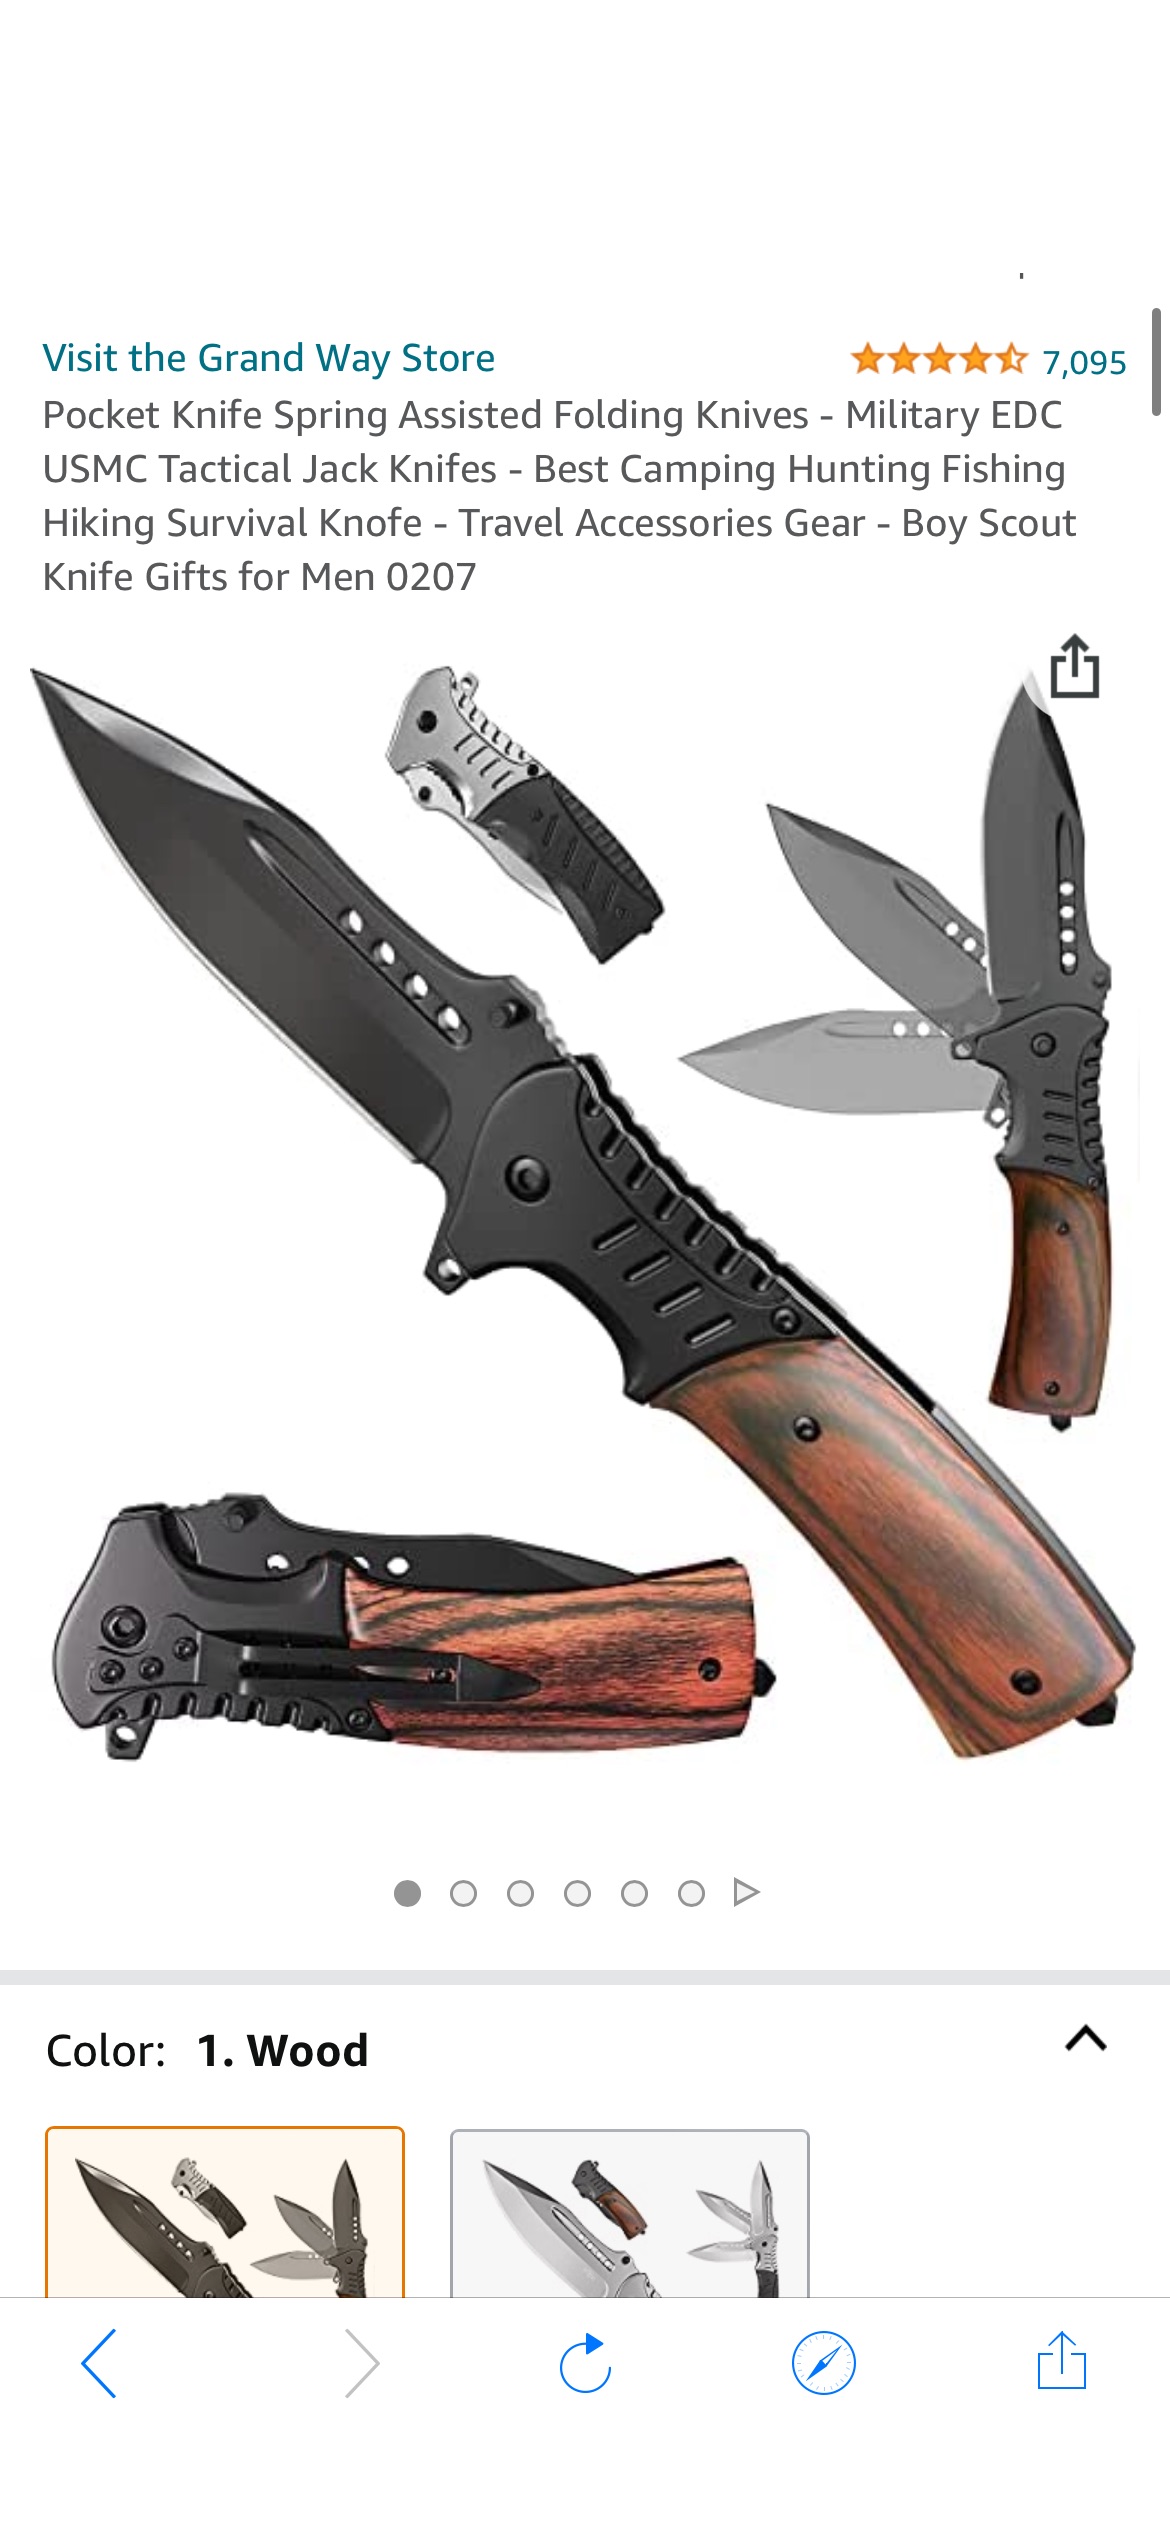 Amazon.com: Pocket Knife Spring Assisted Folding Knives - Military EDC USMC Tactical Jack Knifes - Best Camping Hunting Fishing Hiking Survival Knofe刀